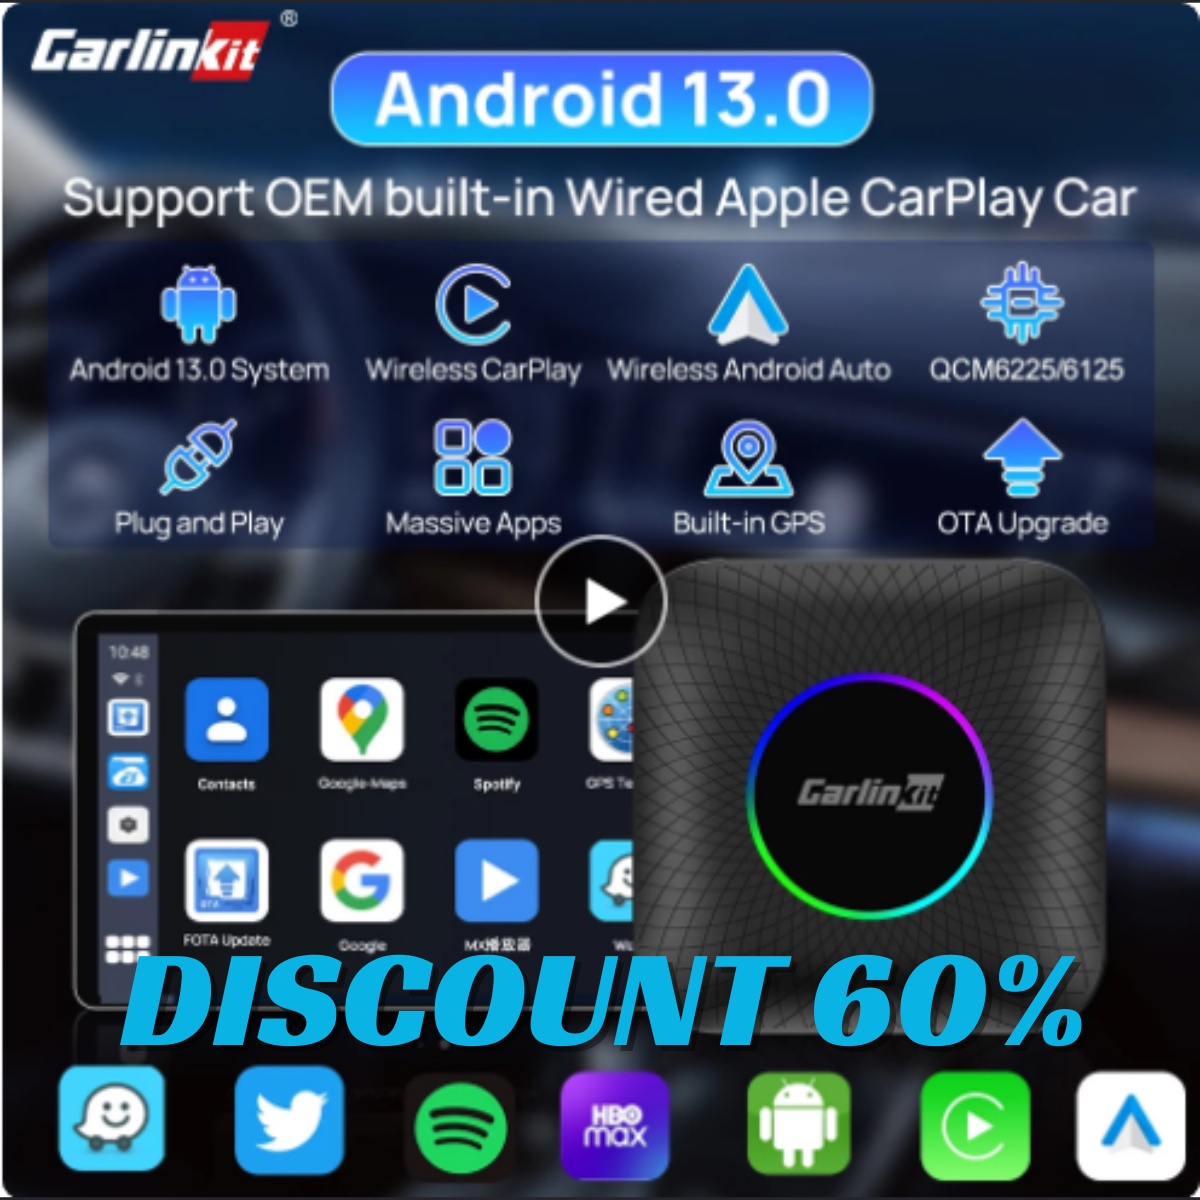 Revolutionizing In-Car Entertainment: Introducing the QCM6125 CarlinKit Smart TV Box